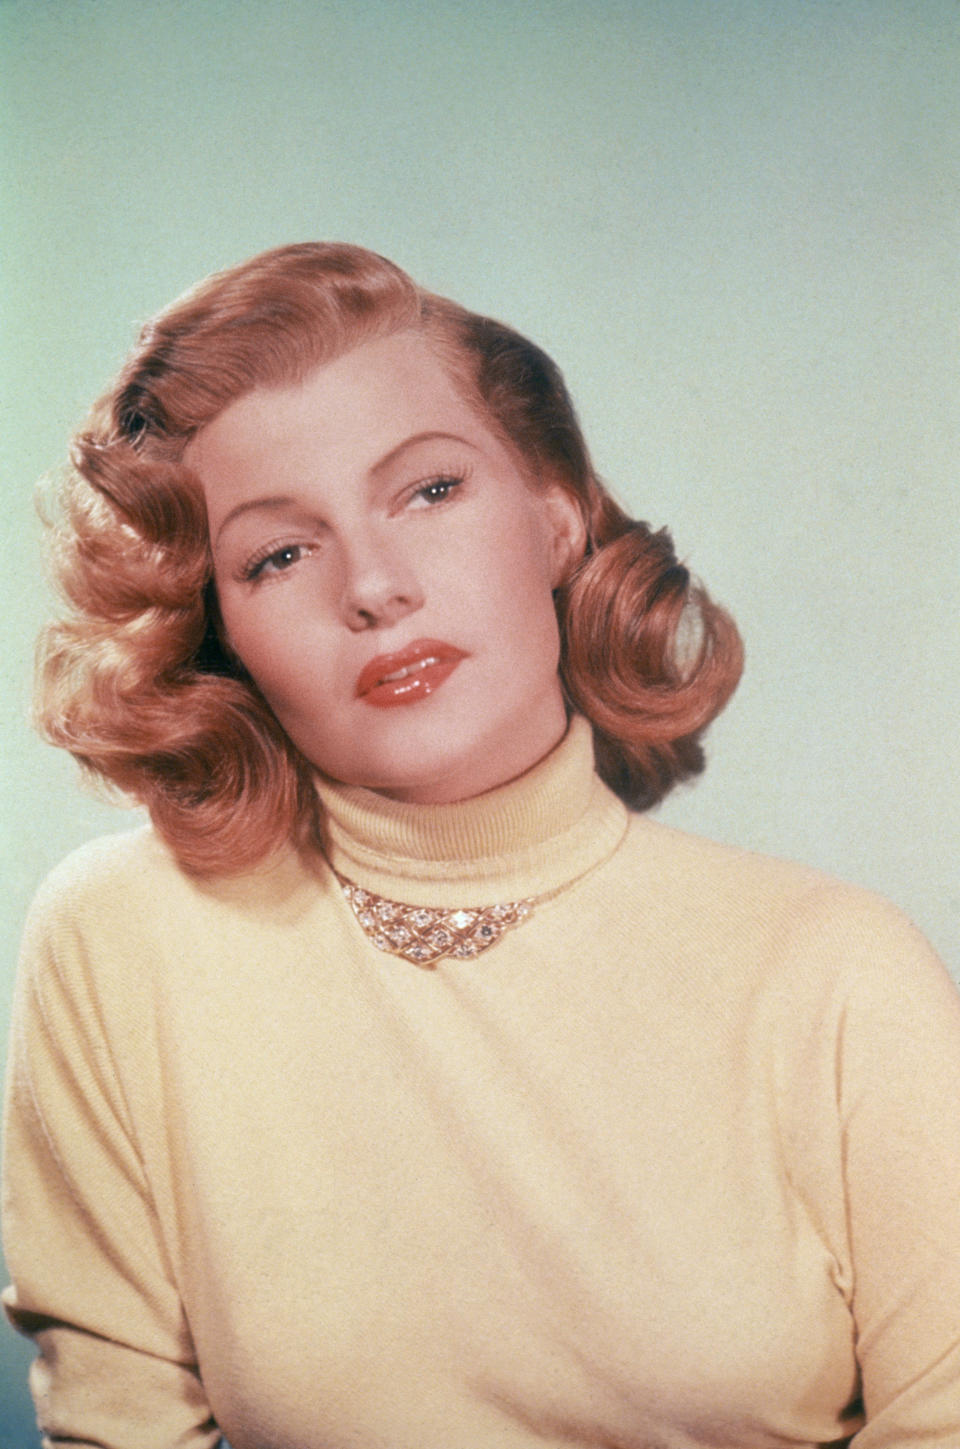 The actress wears a yellow turtleneck, circa 1950.&nbsp;